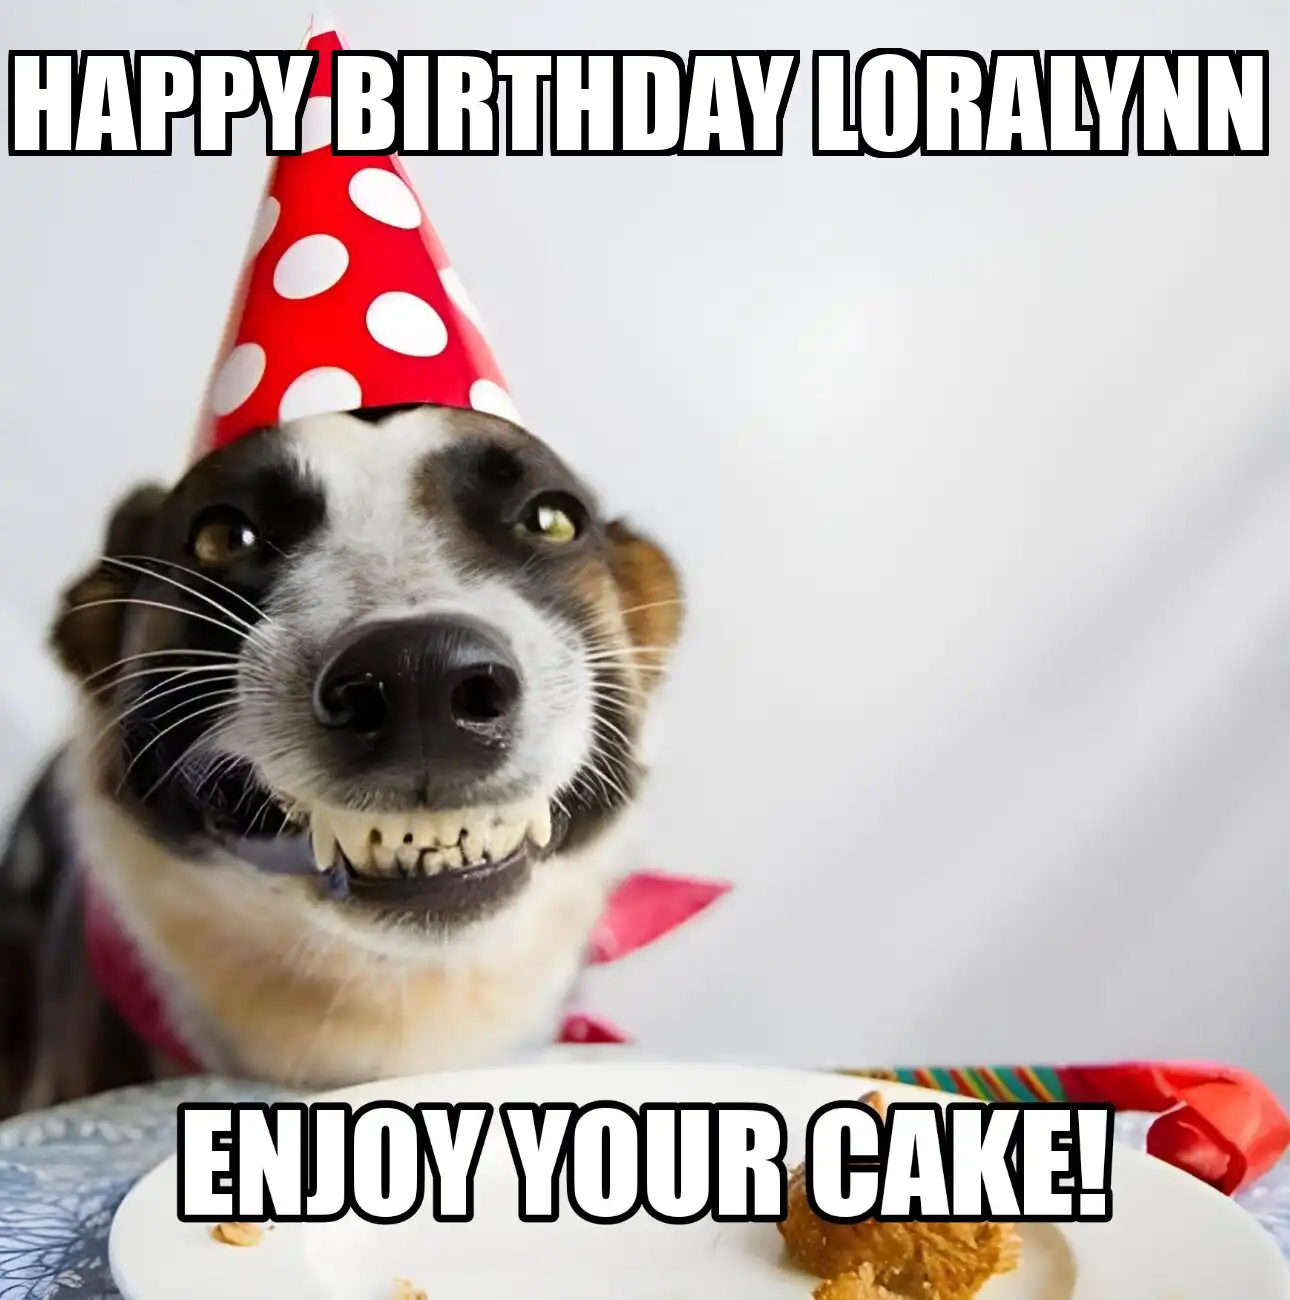 Happy Birthday Loralynn Enjoy Your Cake Dog Meme